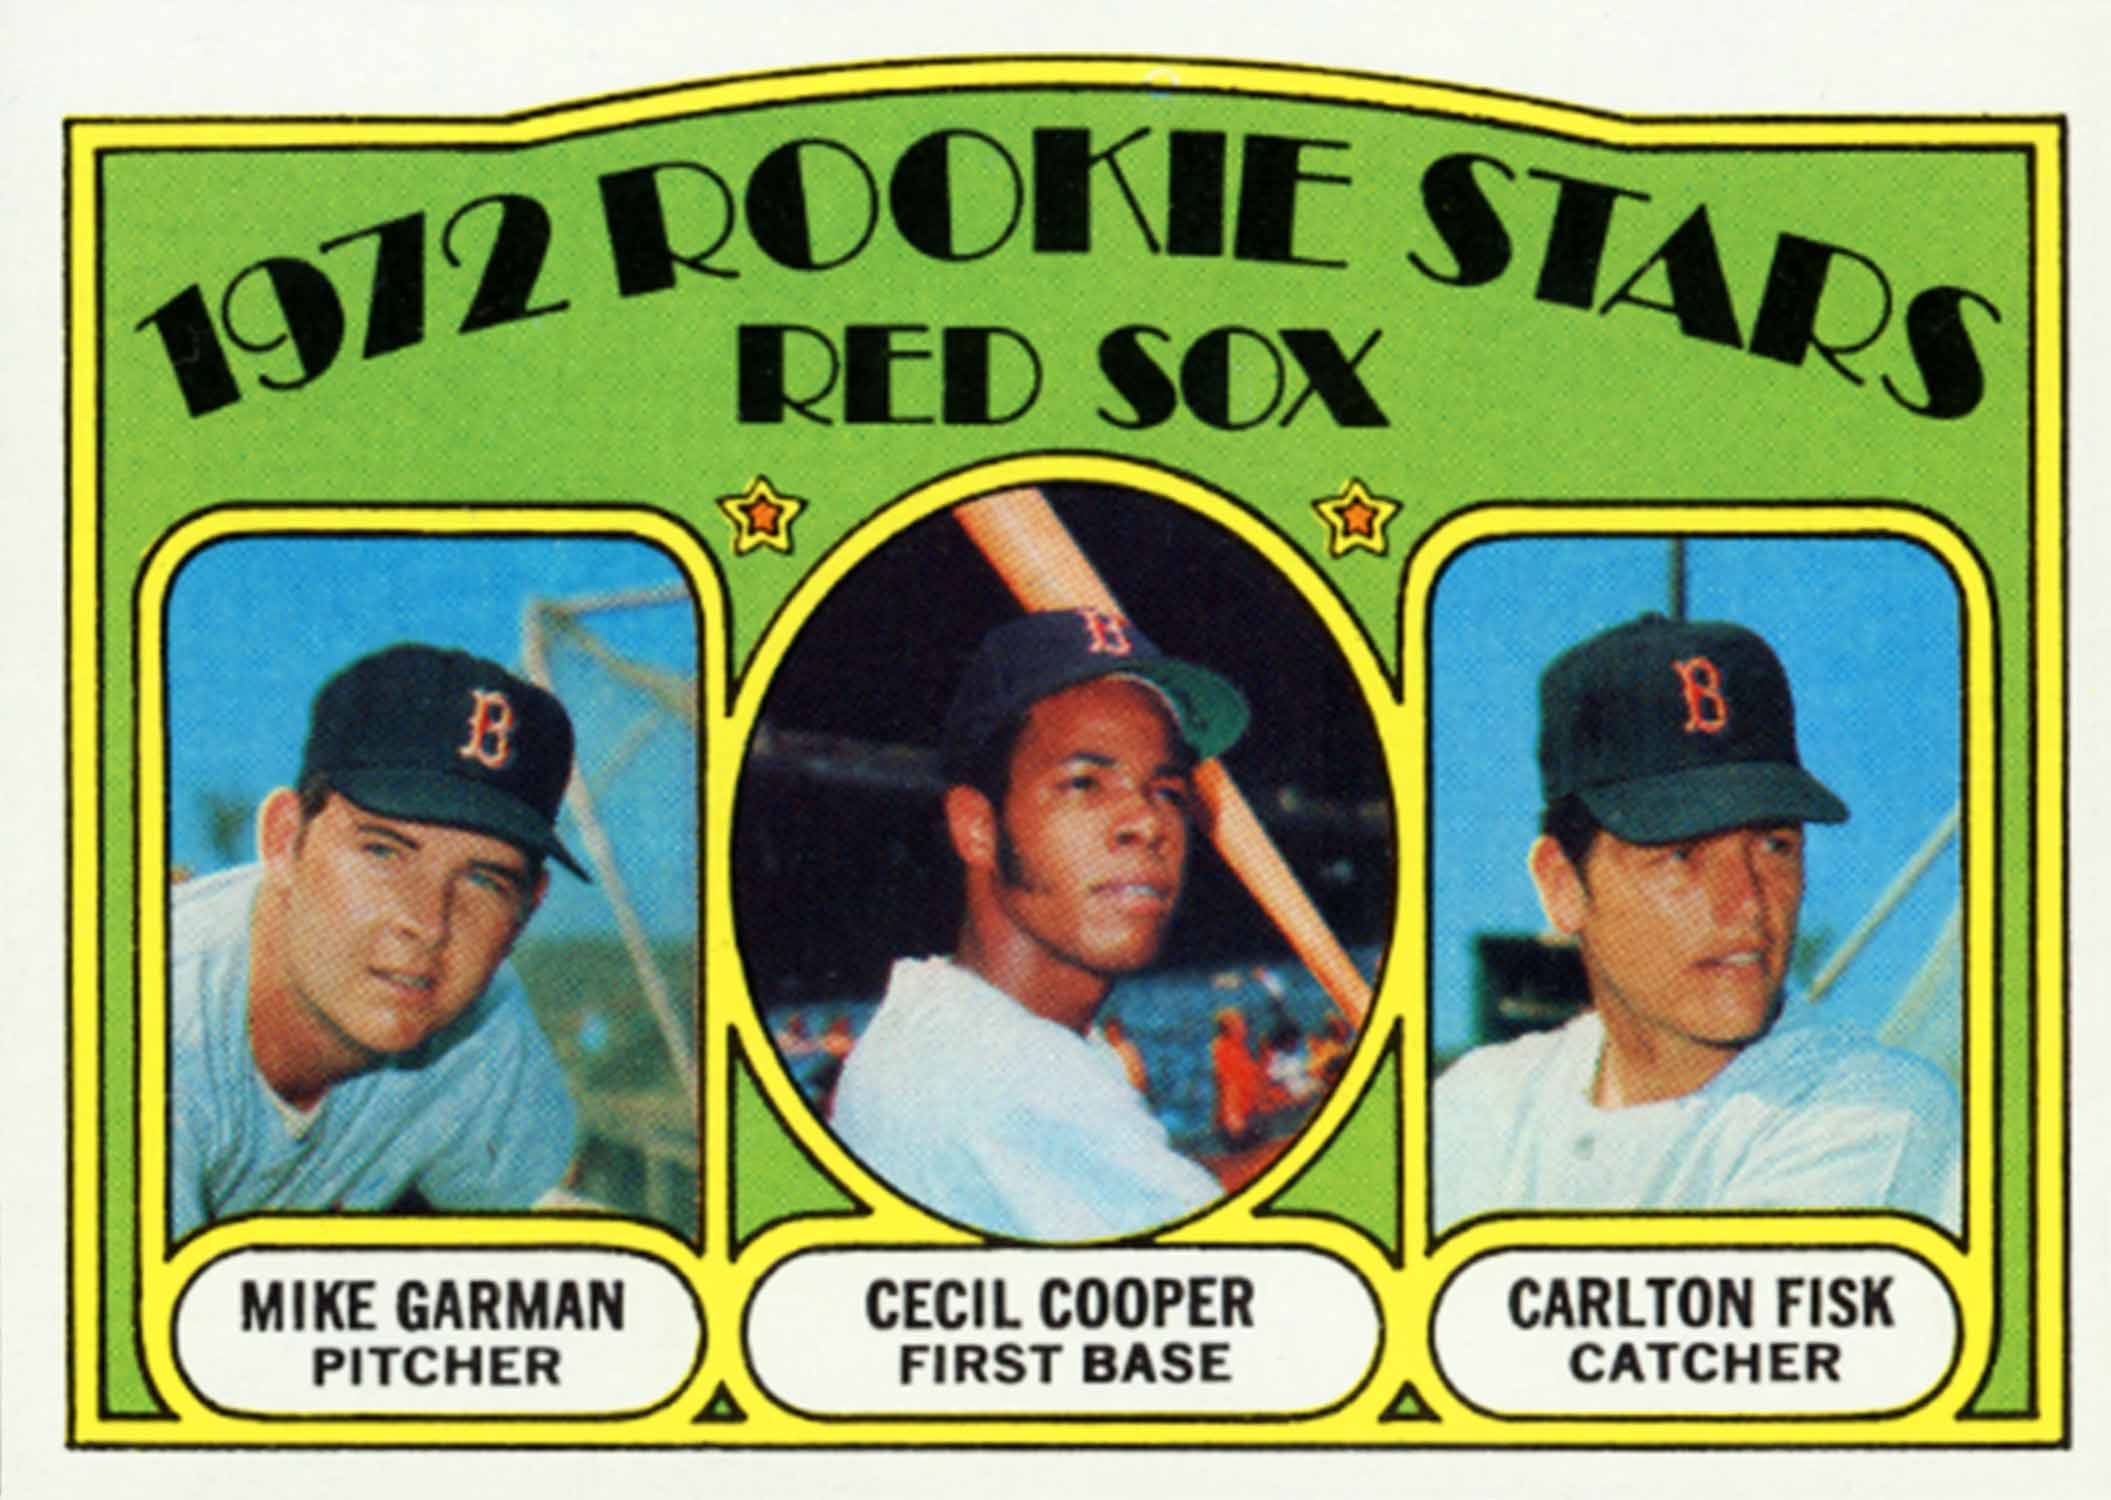 1972 Topps Rookie Stars